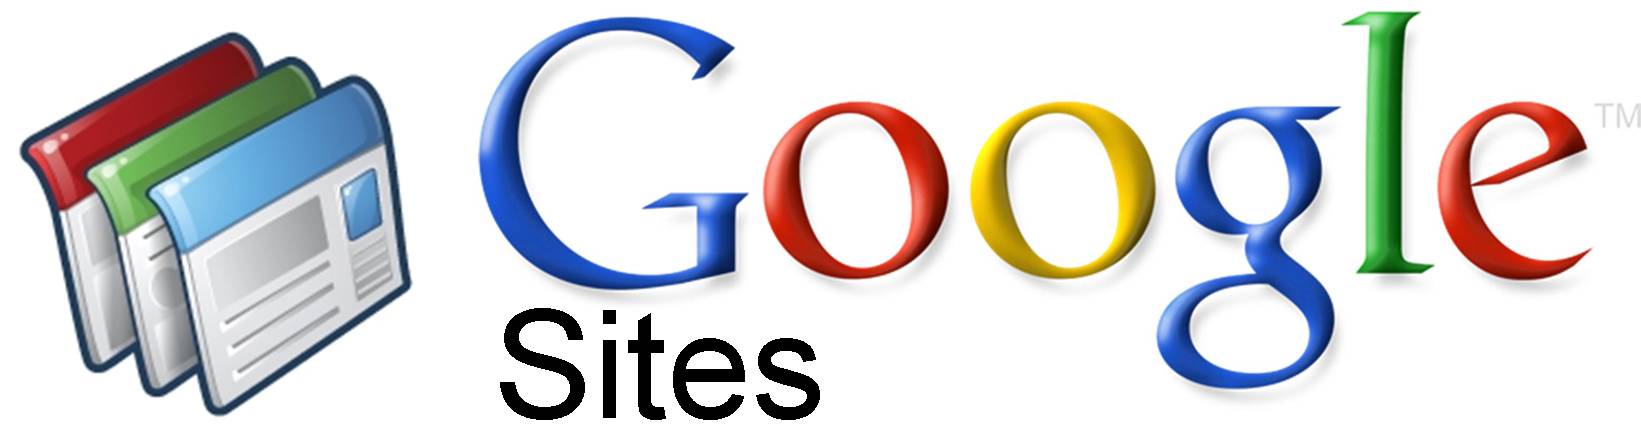 Google Sites Logo - Sites Help